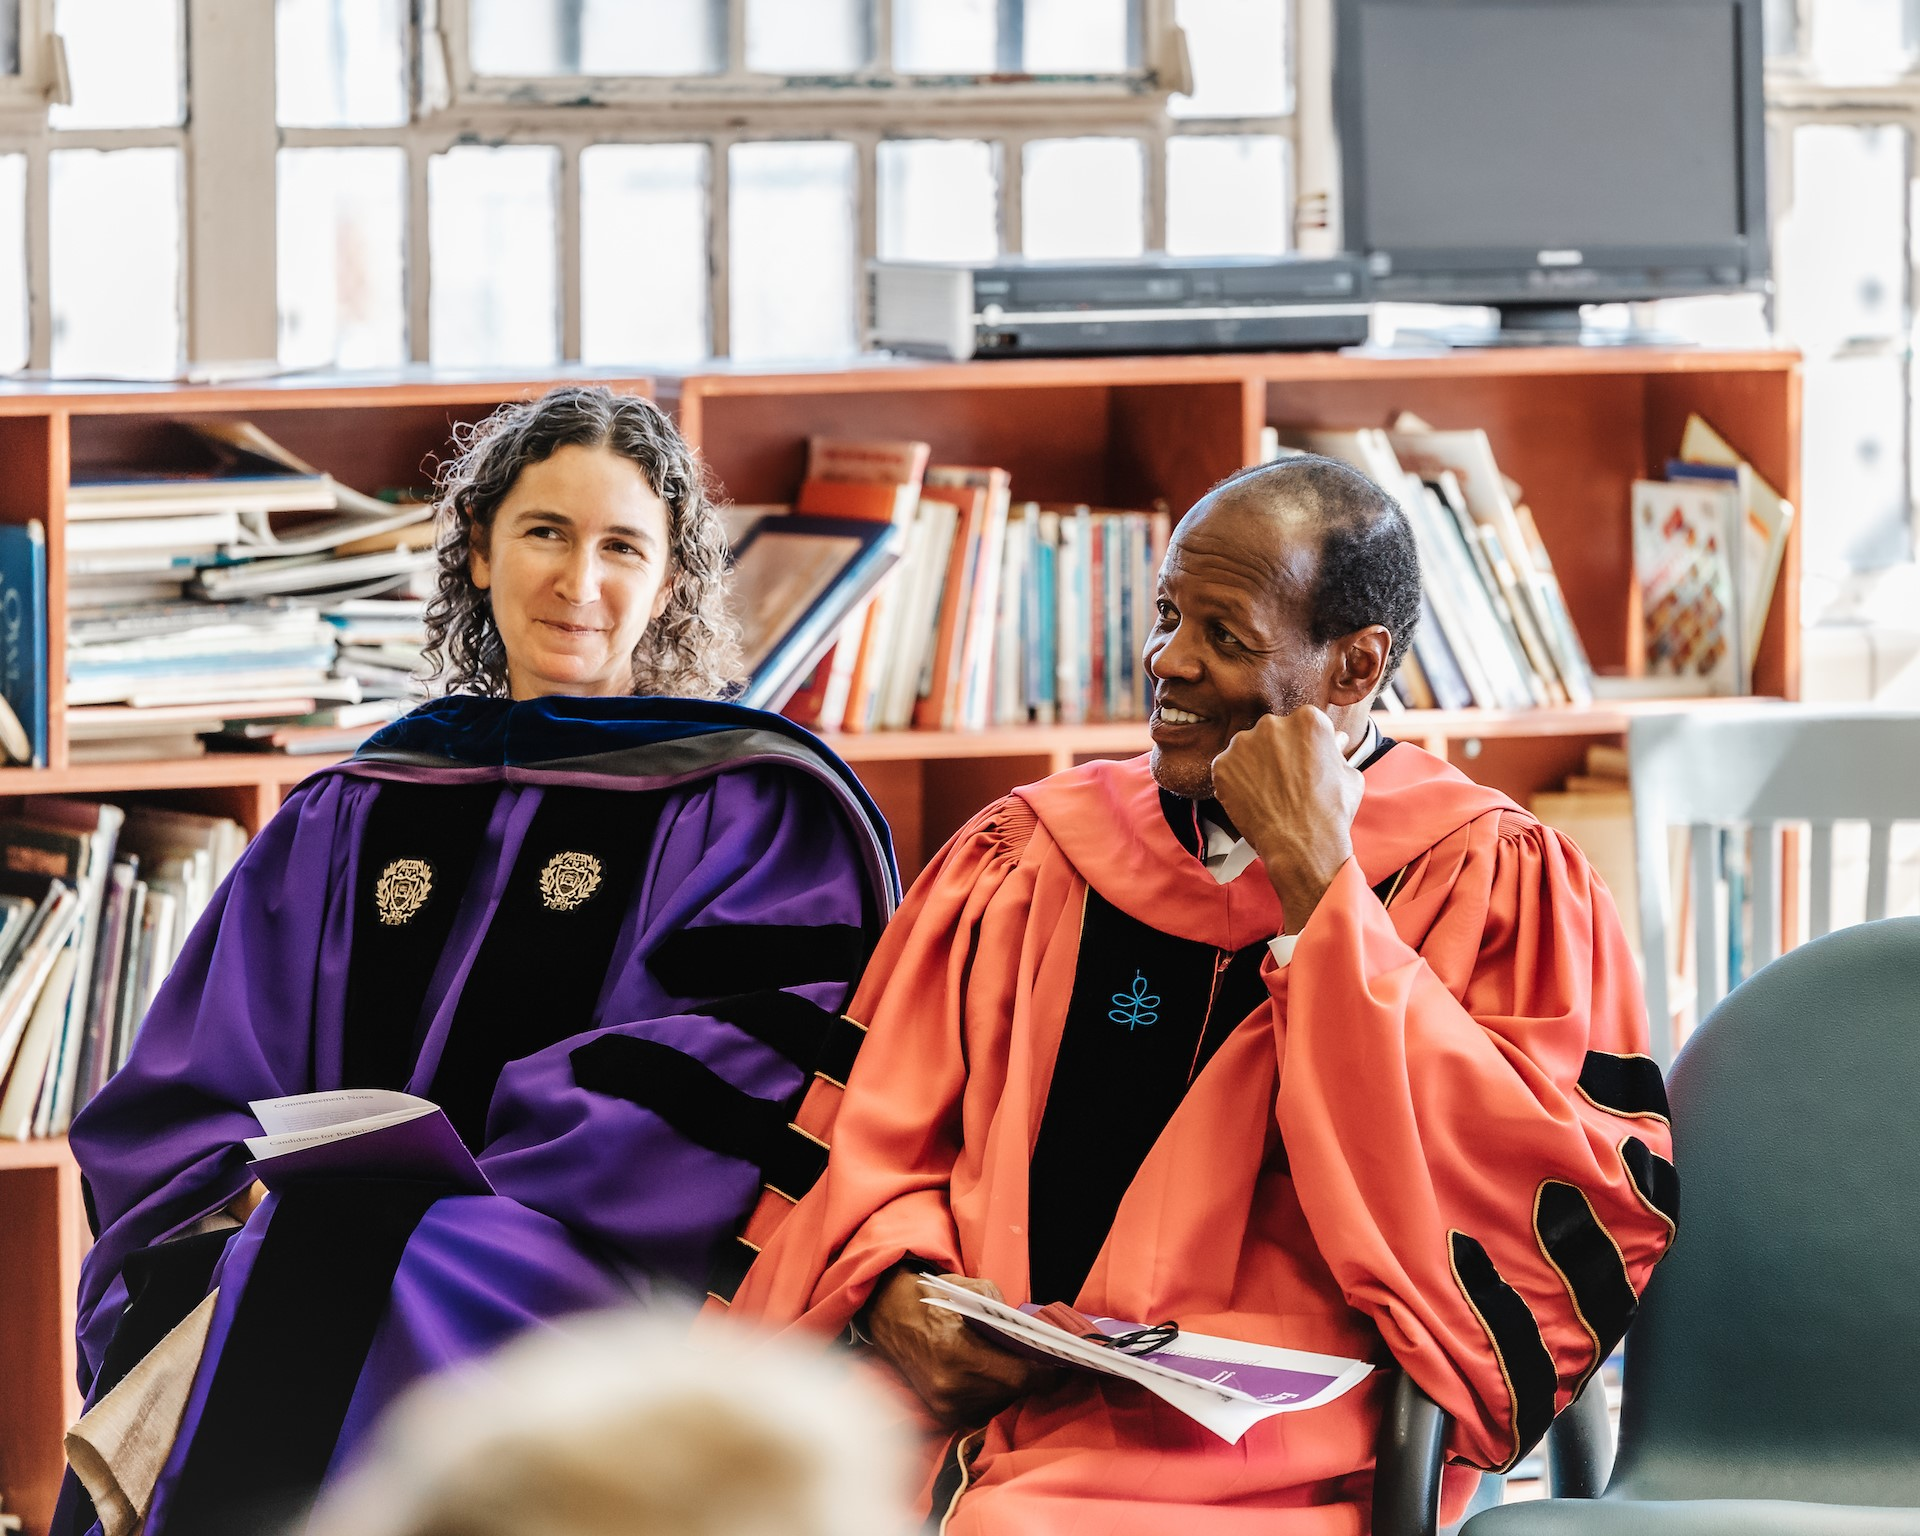 IIE Centennial Fellow Mneesha Gellman and colleague sit in their academic robes at the EPI graduation